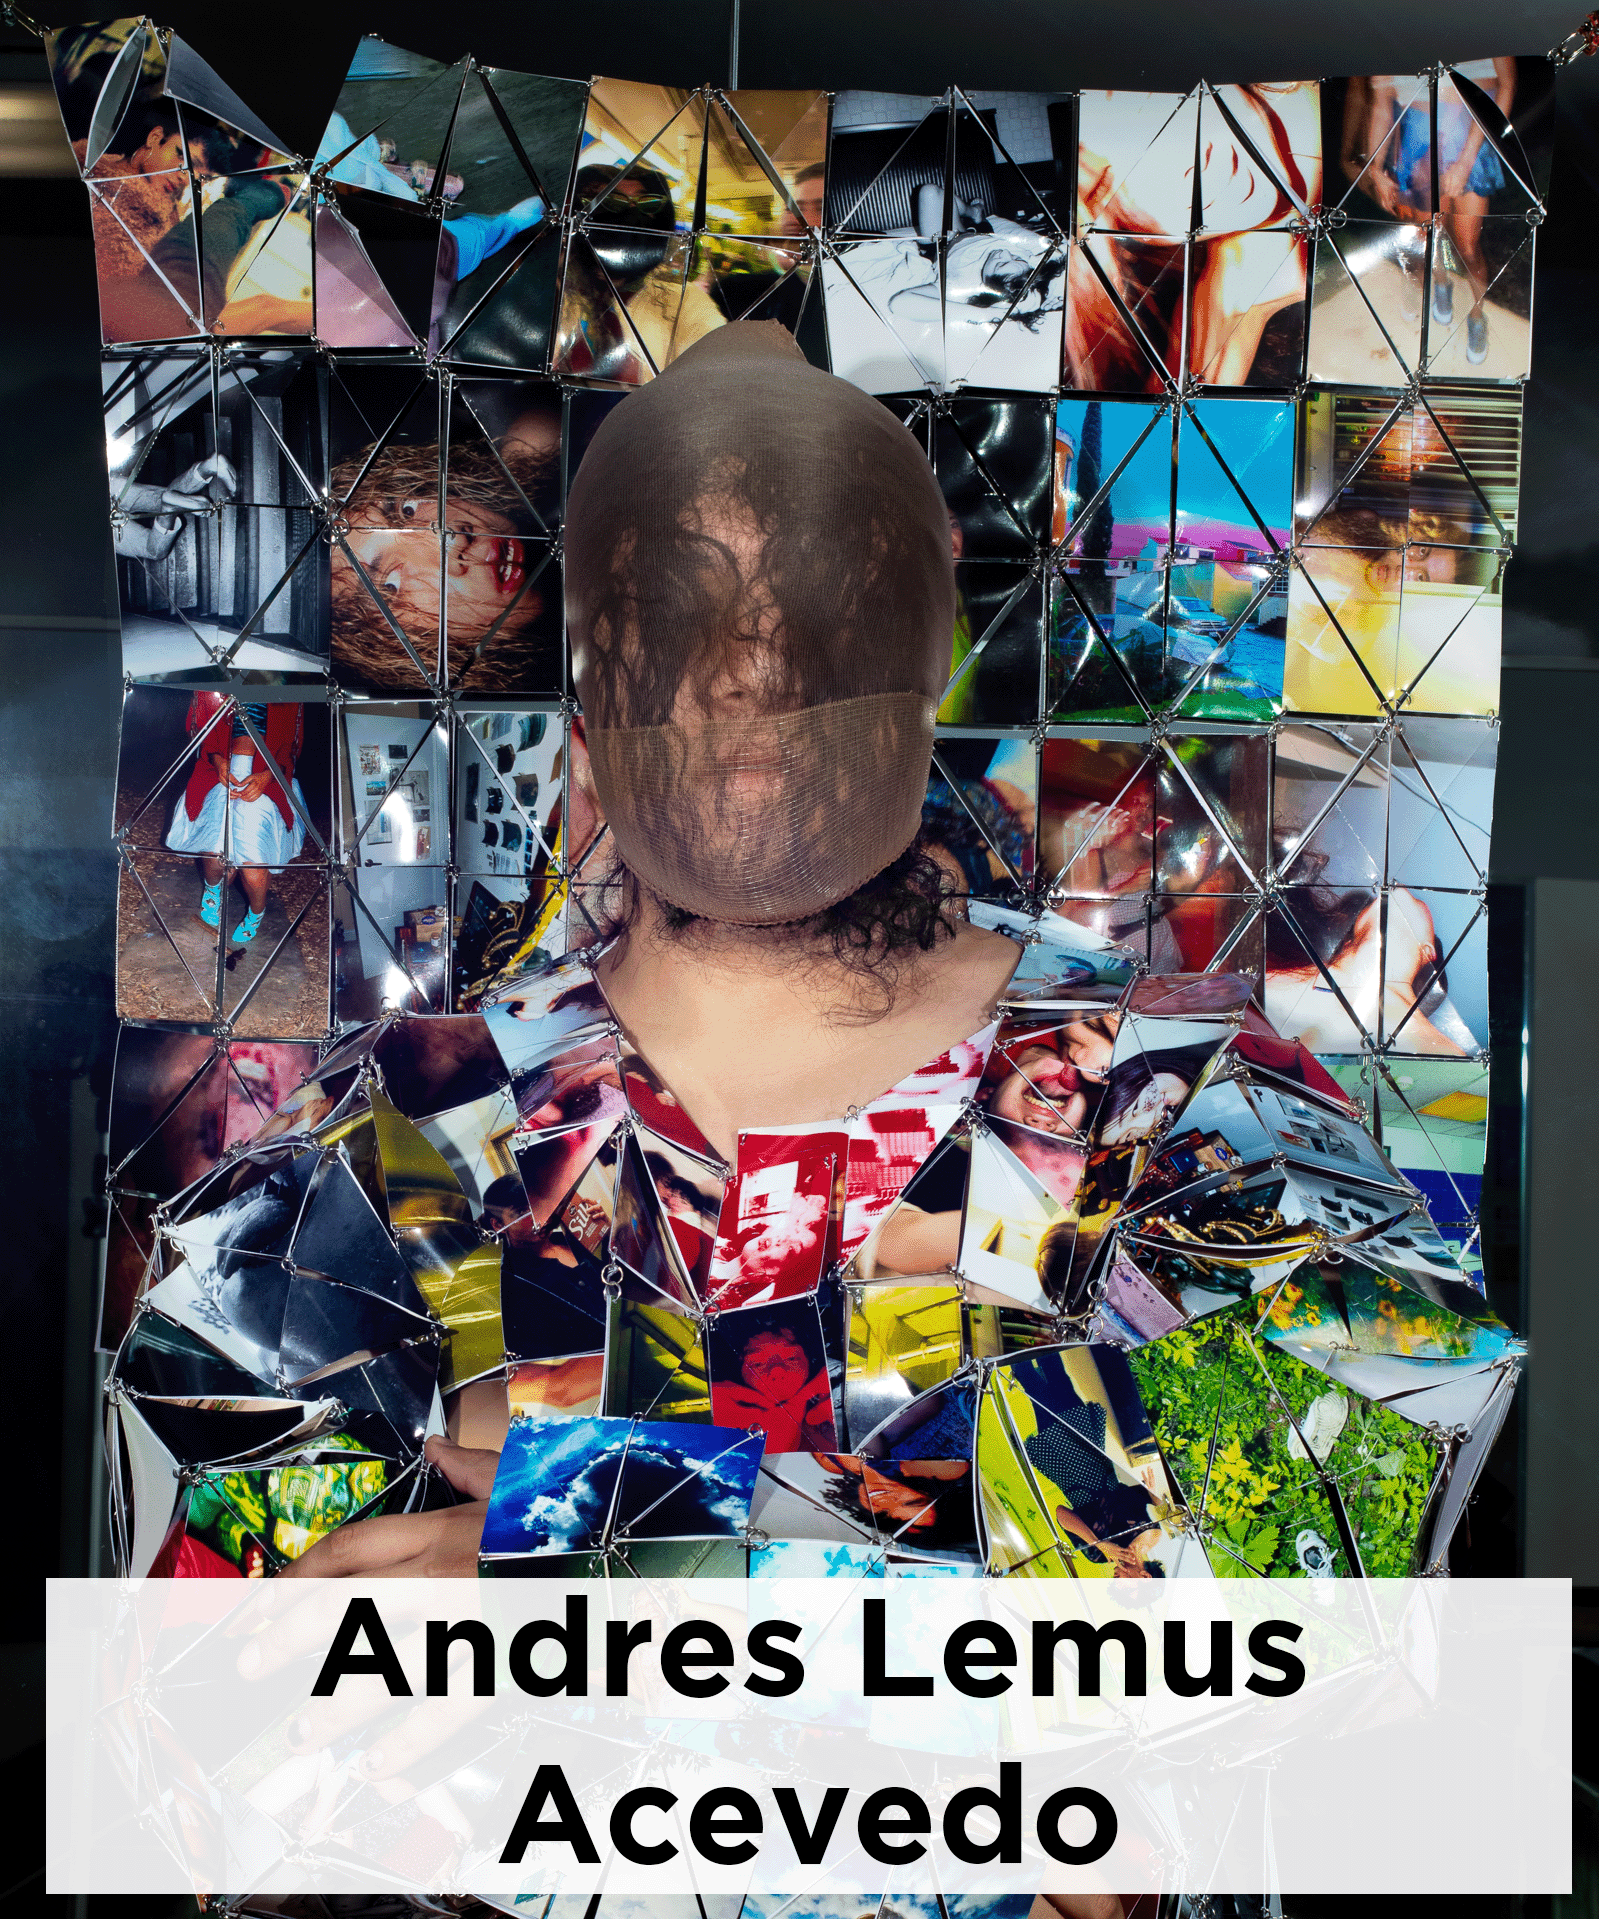 Andres Lemus Acevedo